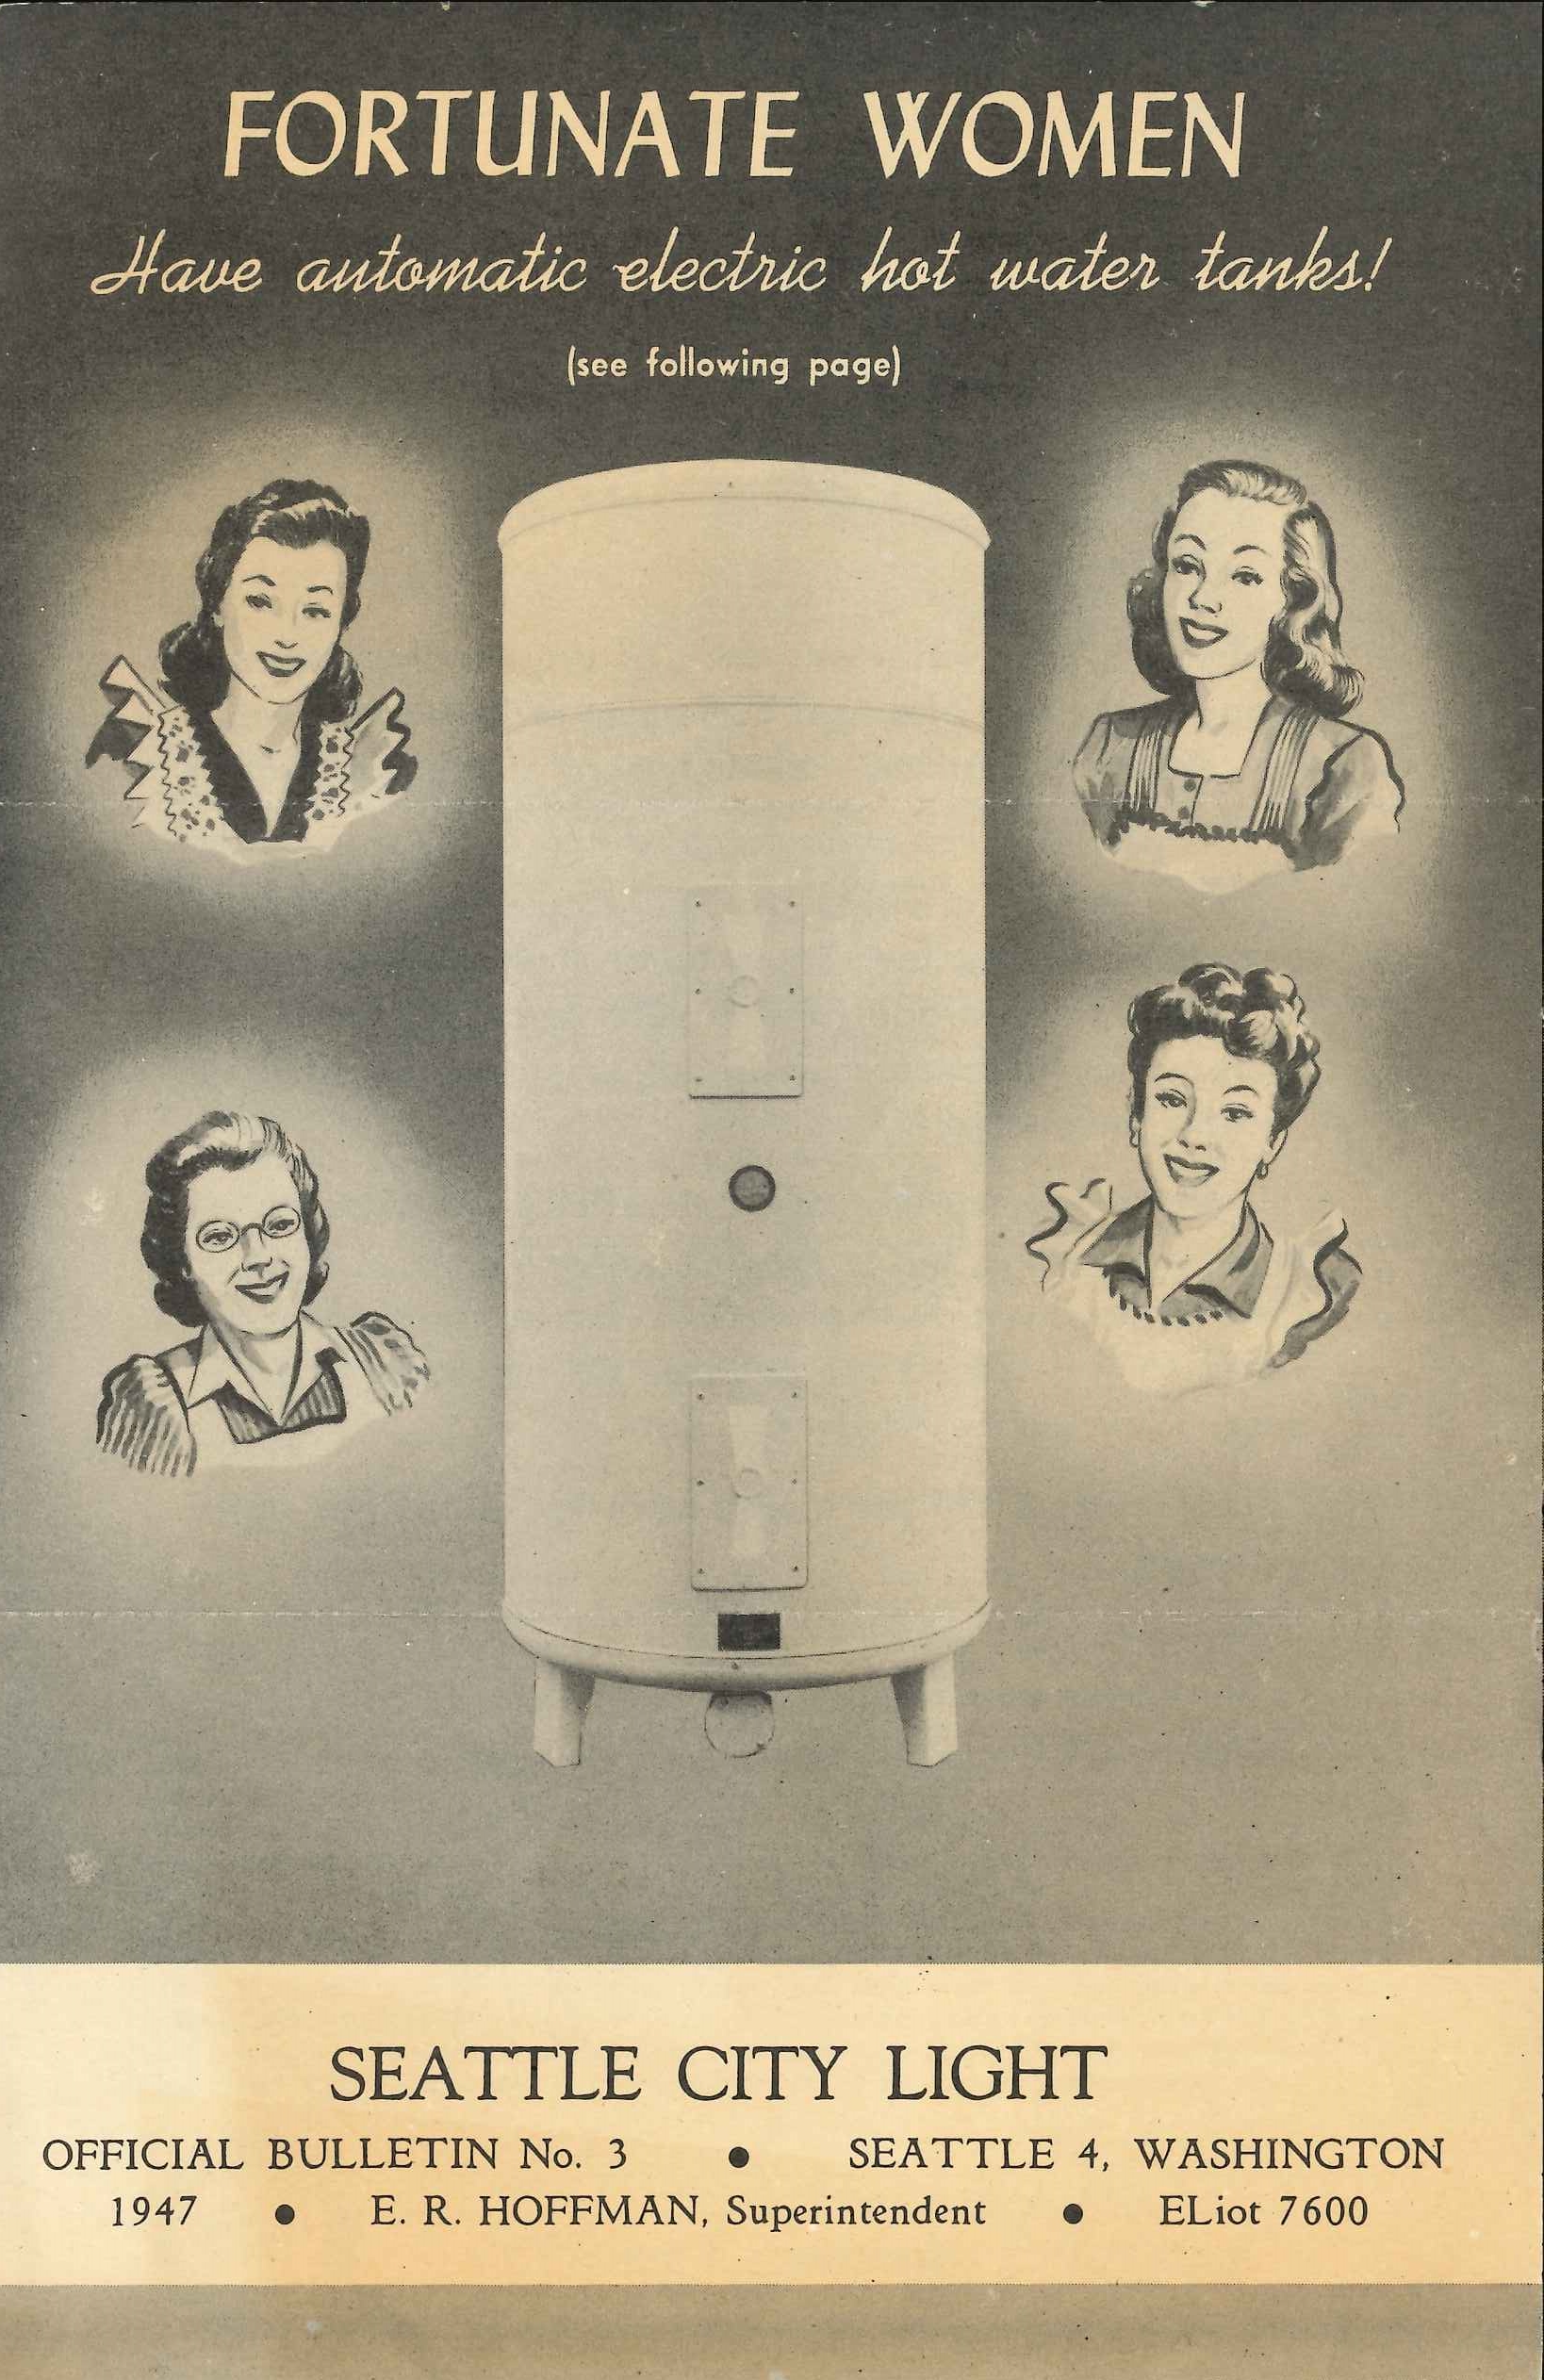 Seattle City Light Official Bulletin No. 3 - 'Fortunate Women' - 1947